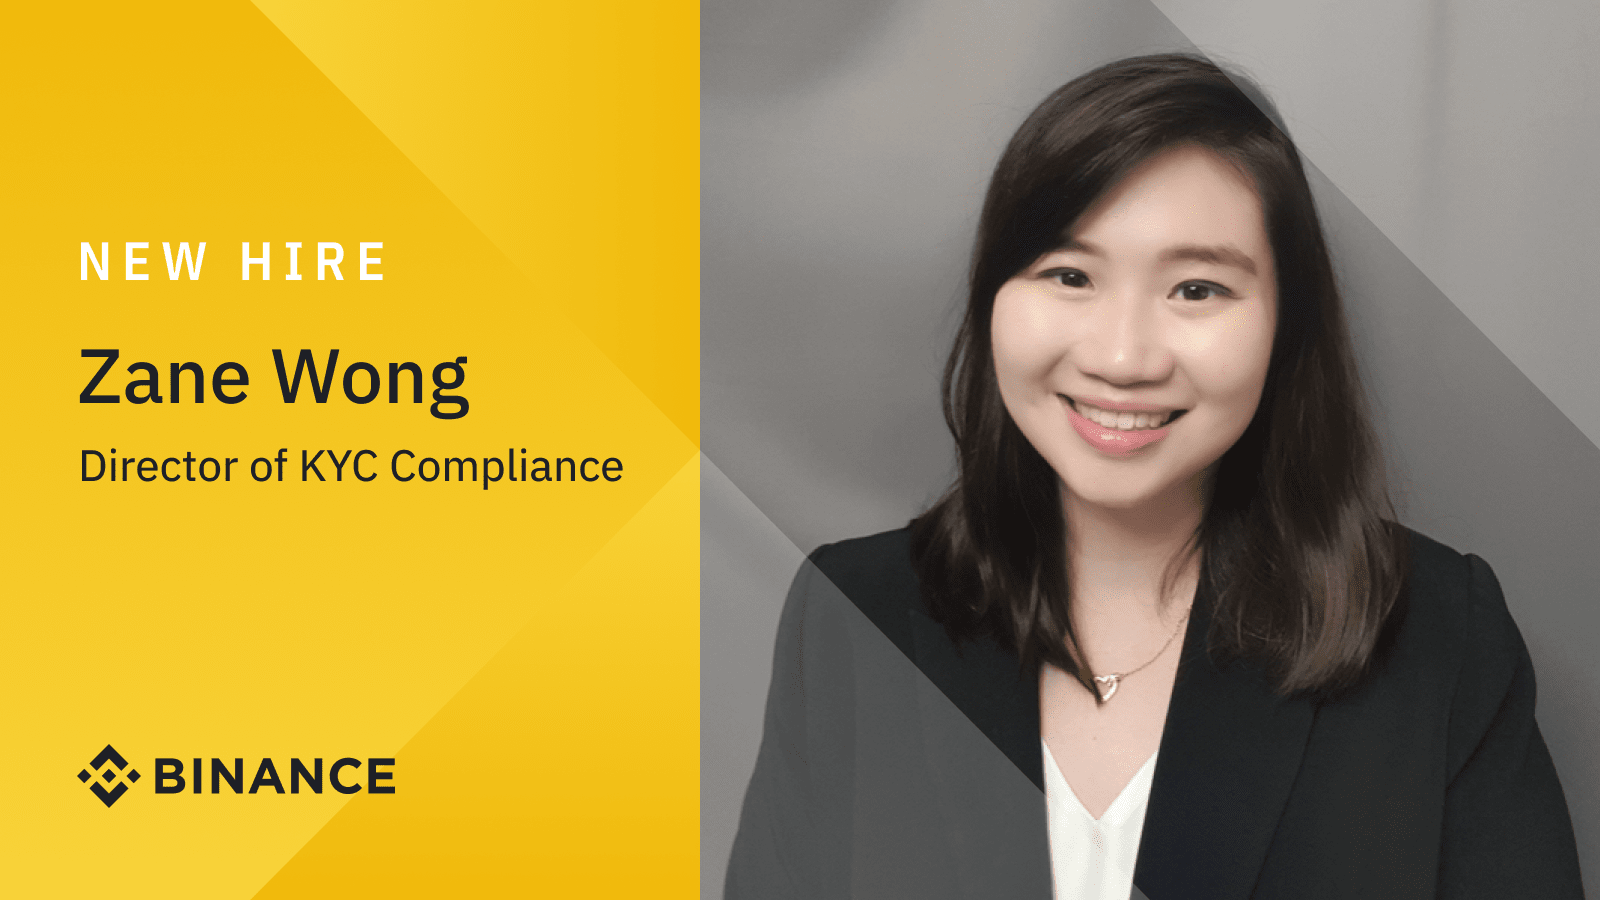 Binance Hires Zane Wong as Director of KYC Compliance